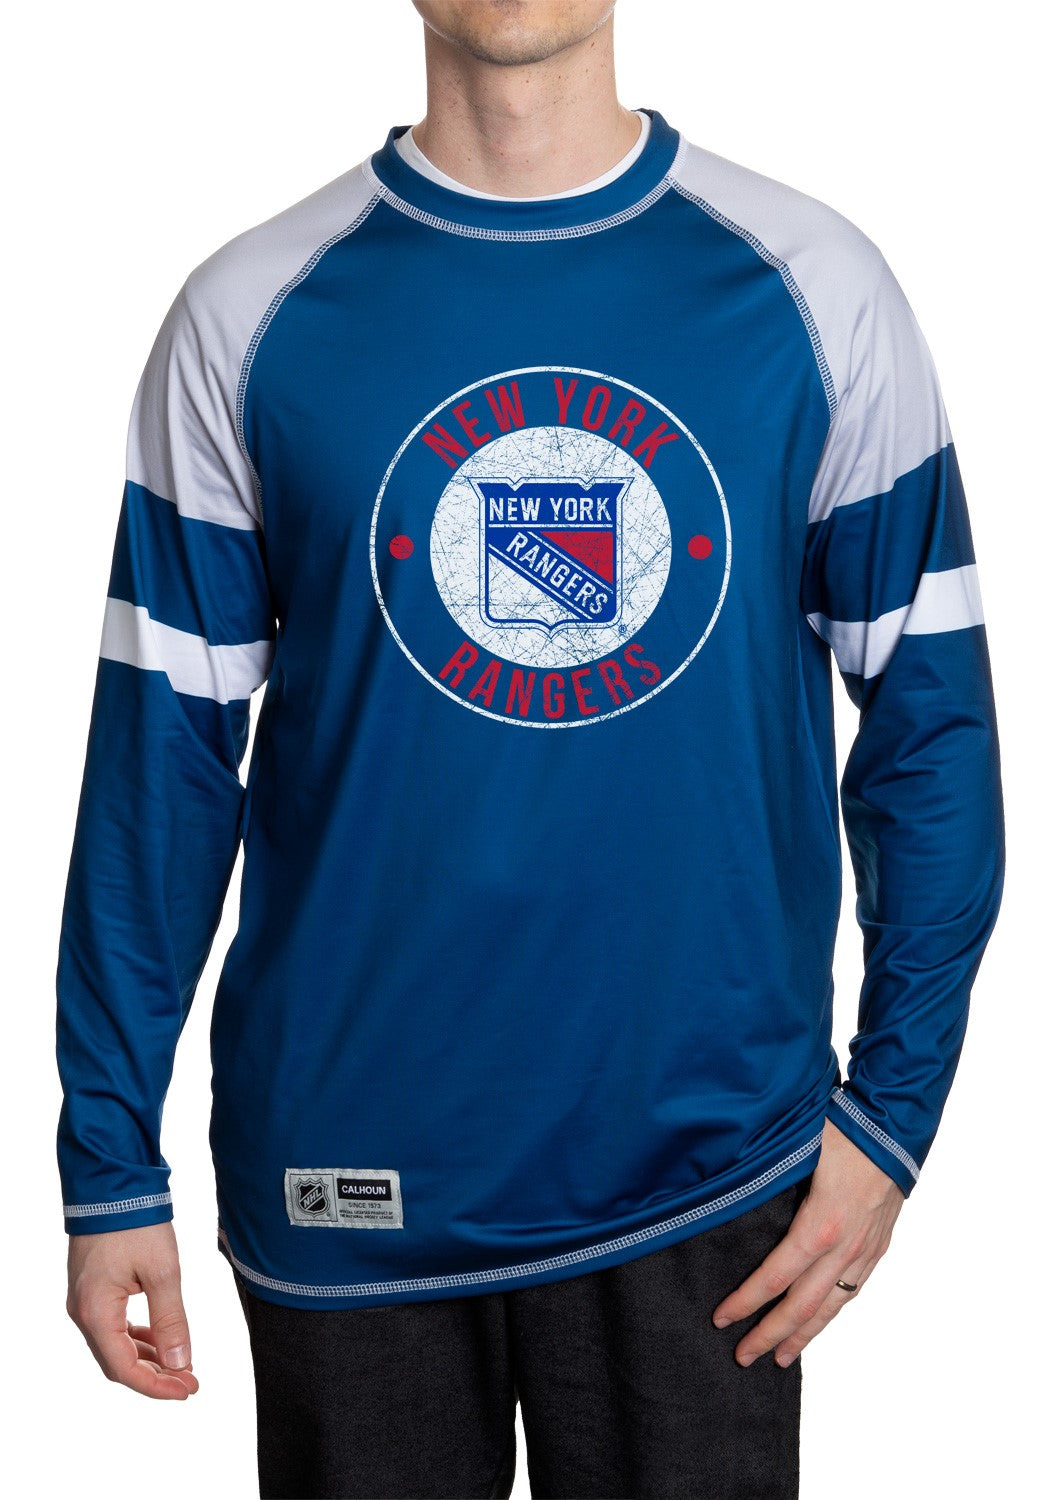 New York Rangers Thermal Long Sleeve Rash Guard Shirt